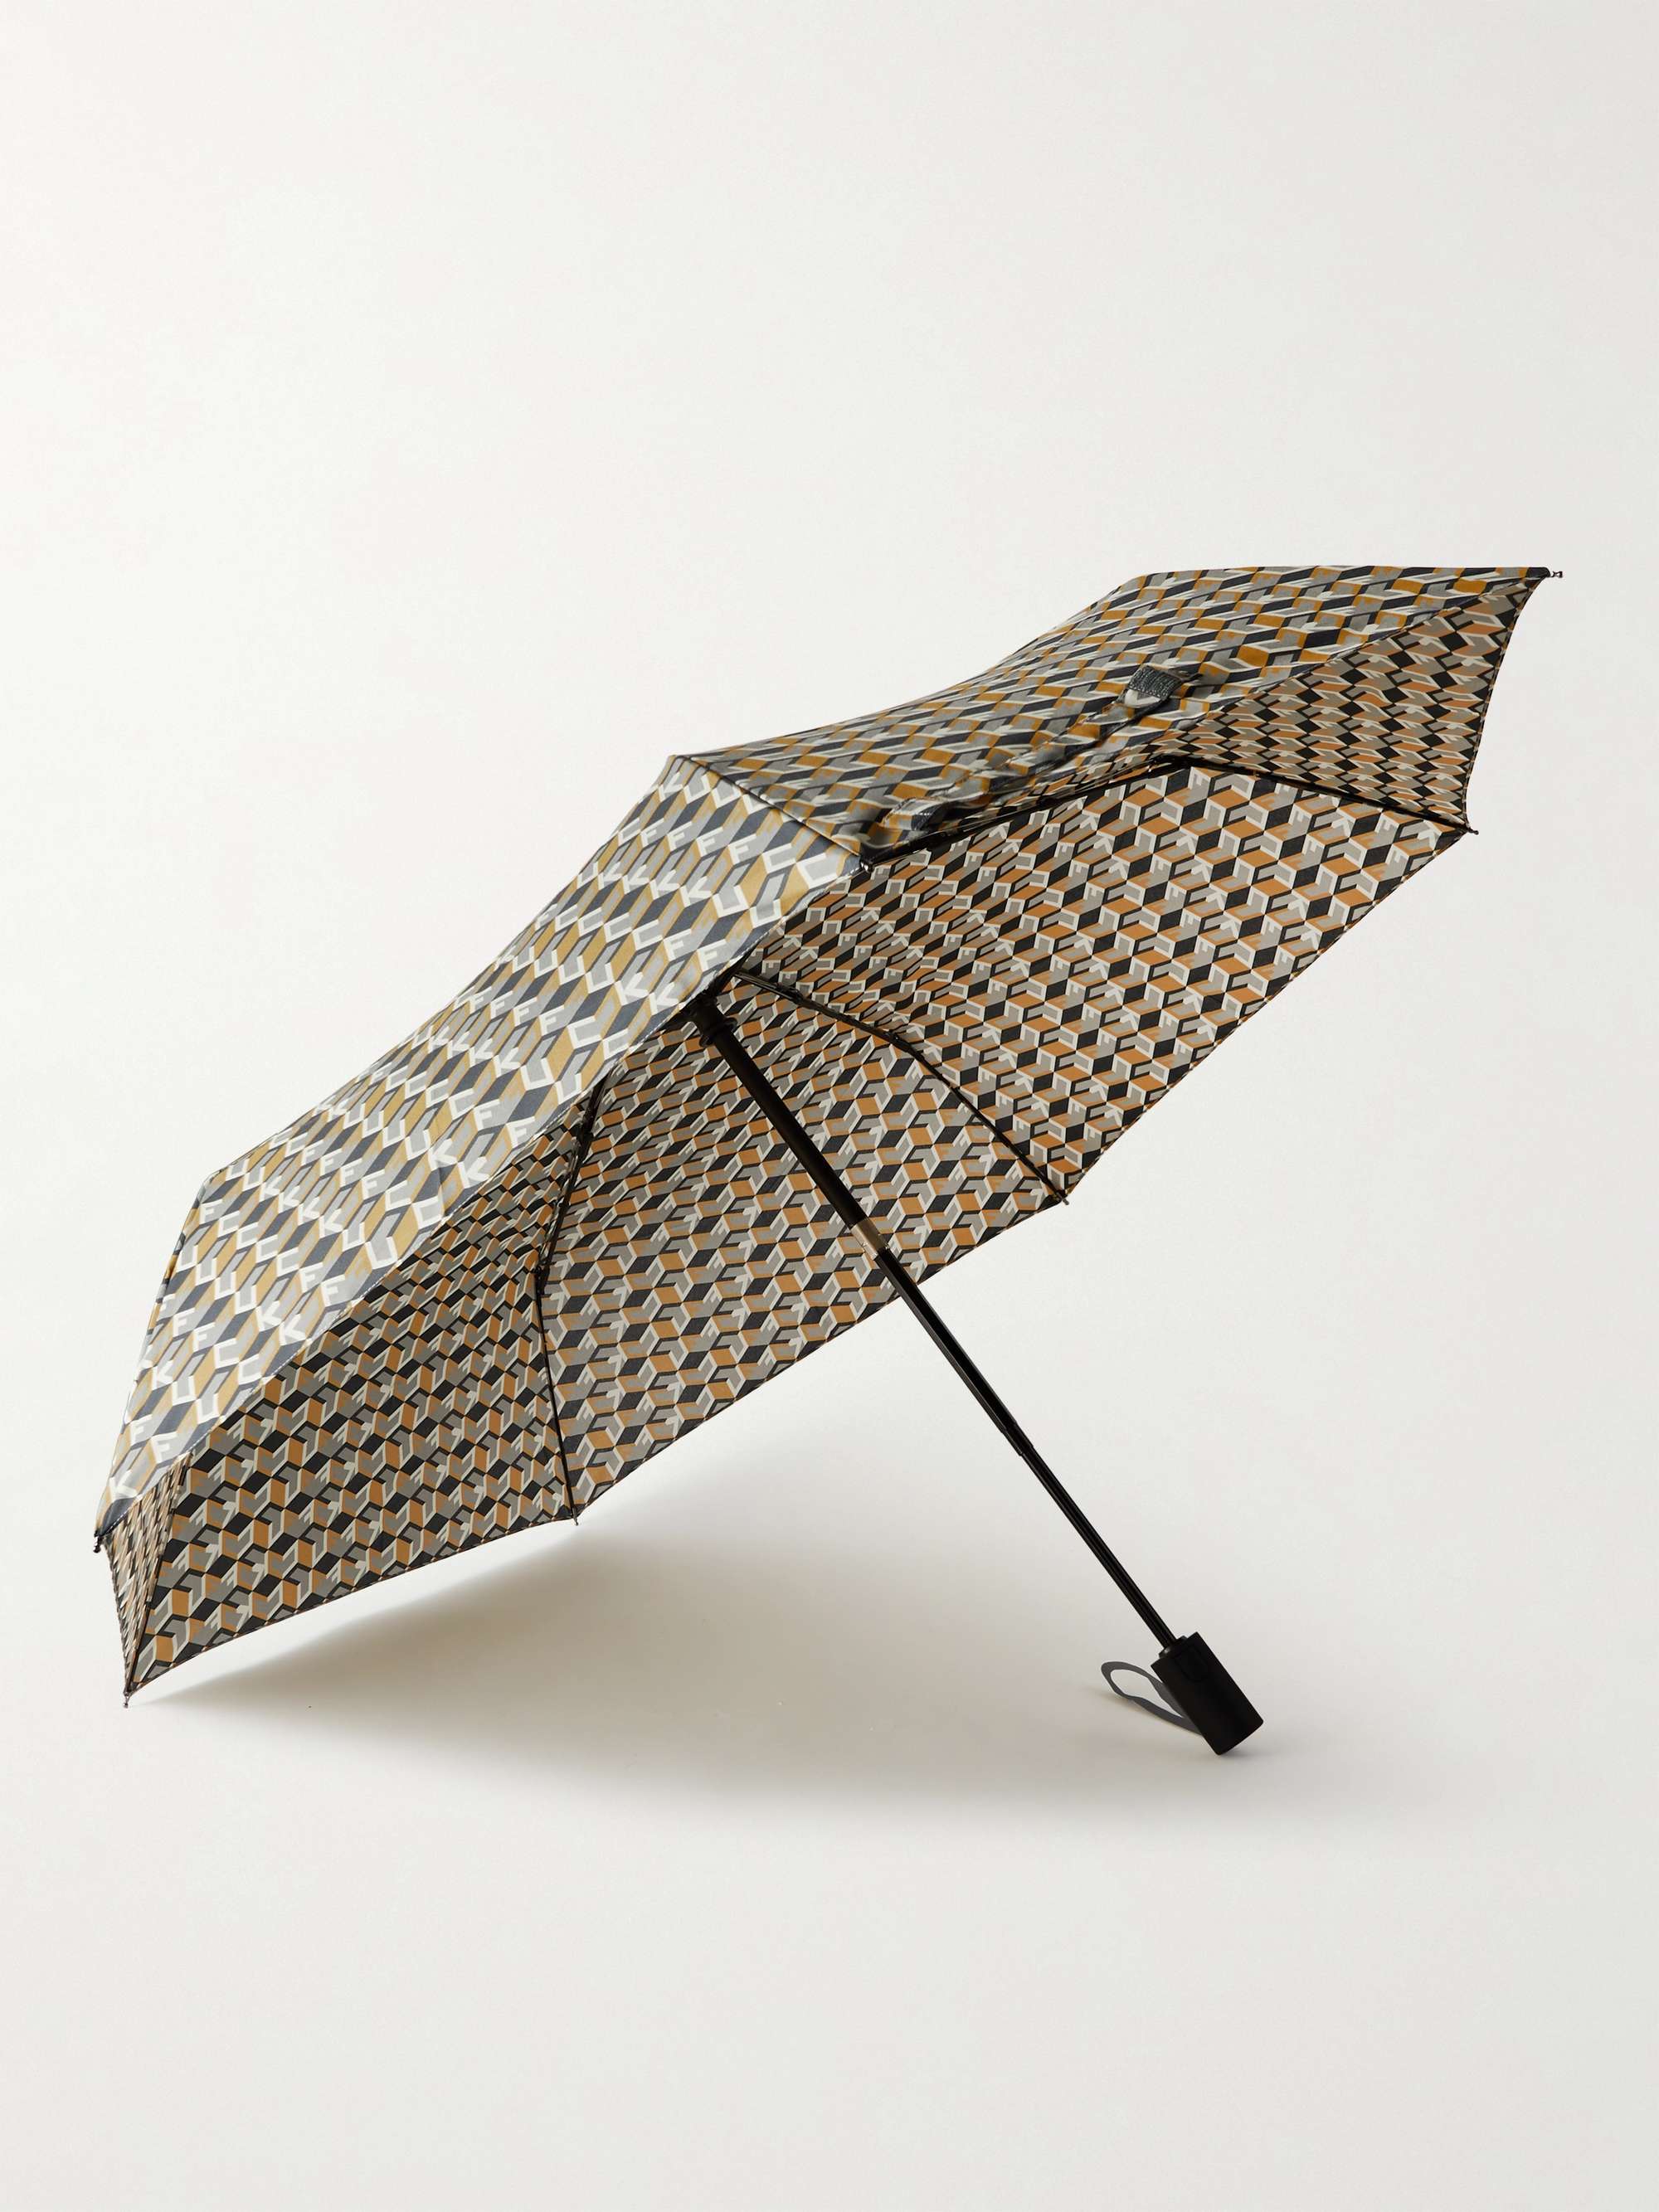 UNDERCOVER MADSTORE + KiU MADSTORE Printed Fold-Up Umbrella